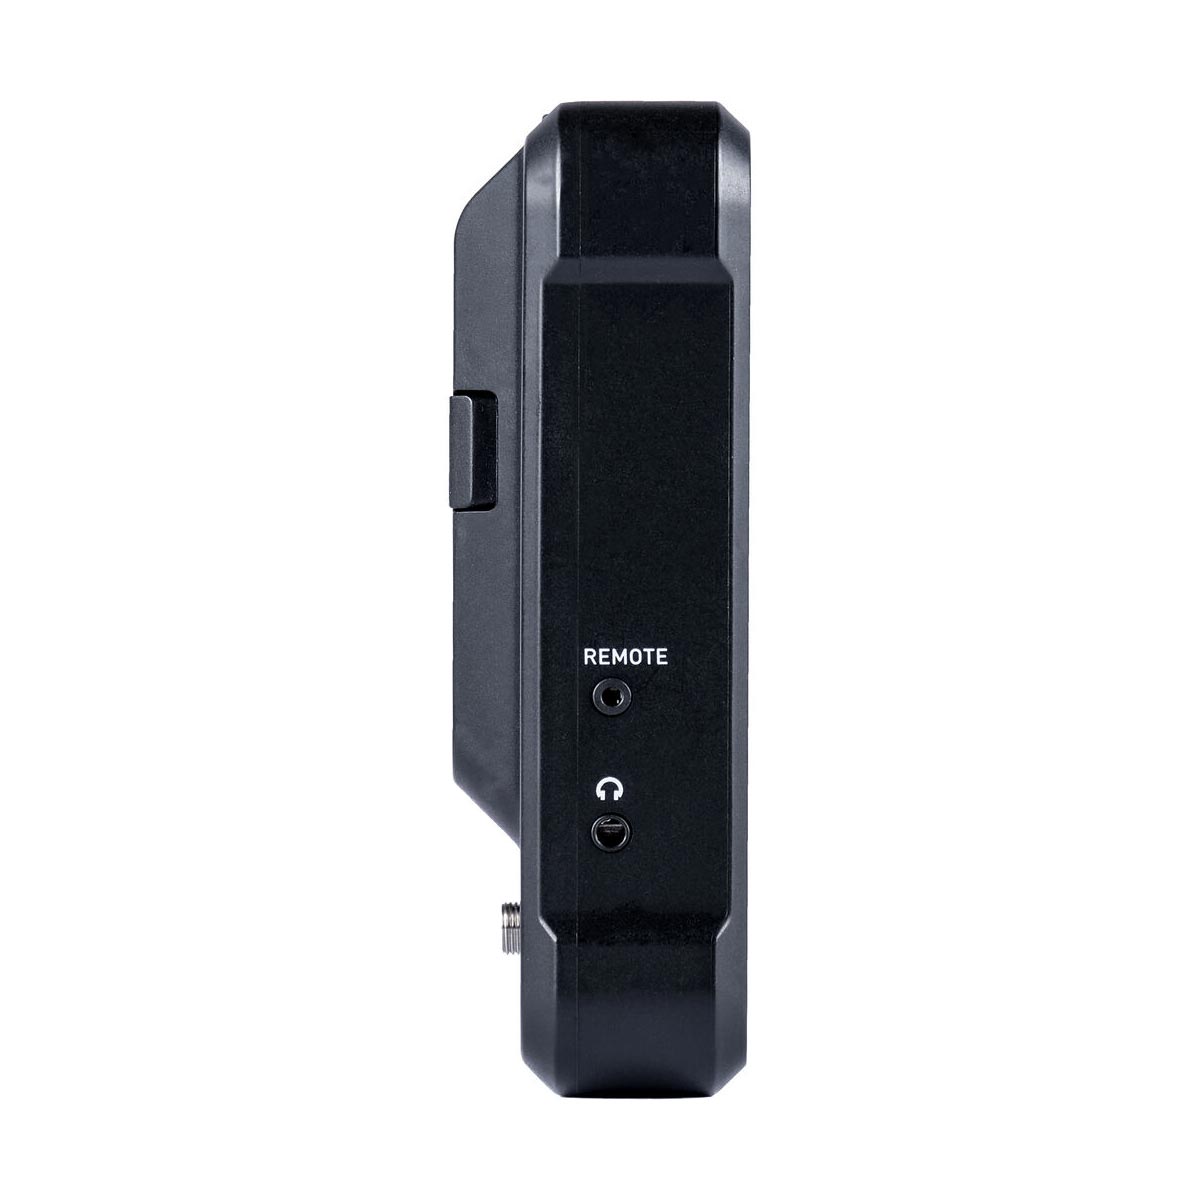 Atomos Shinobi 7" 4K HDMI/SDI HDR Monitor